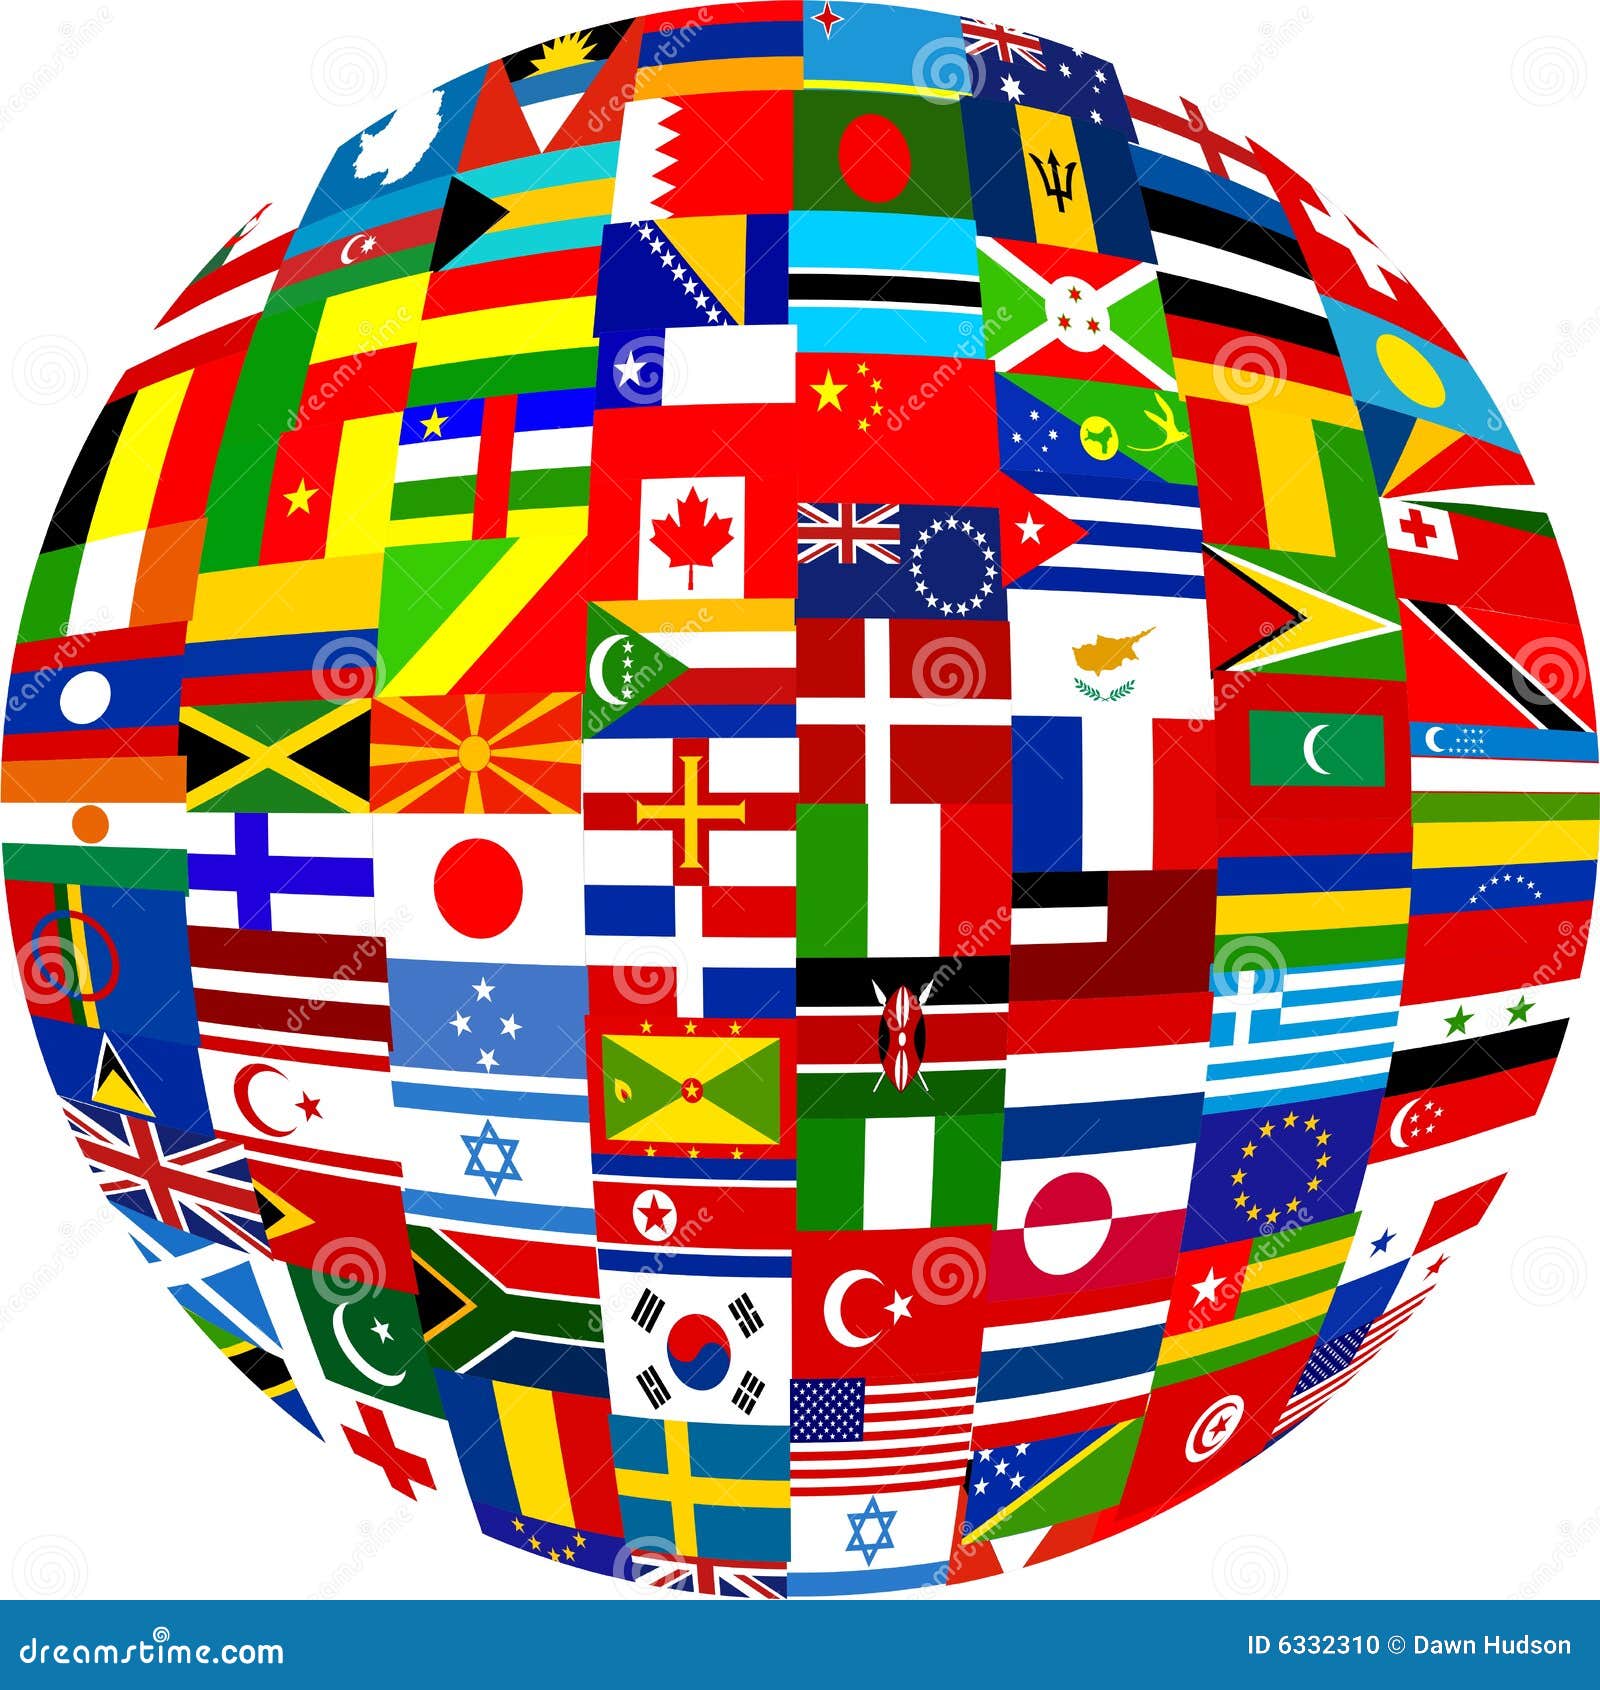 clip art flags international - photo #49